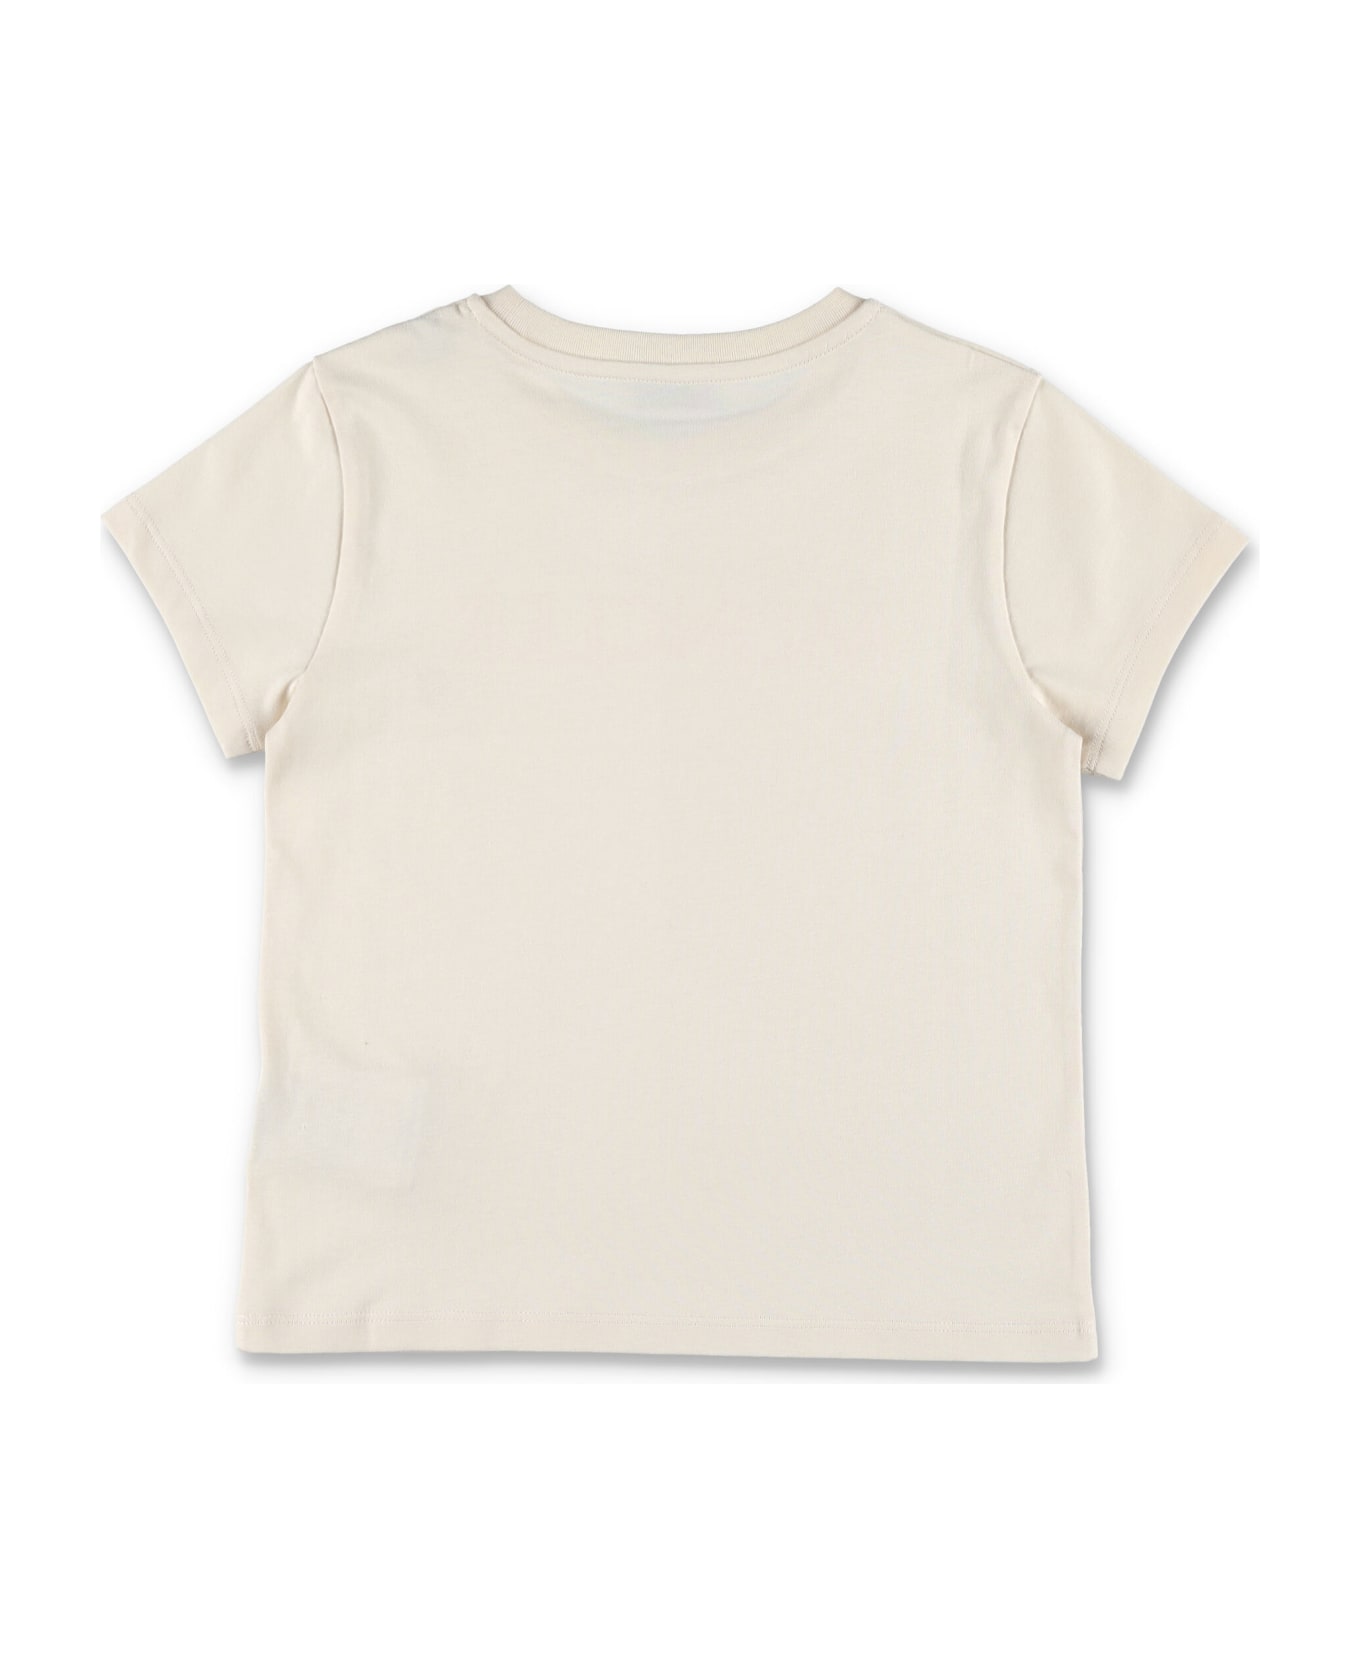 Moncler Short Sleeves T-shirt